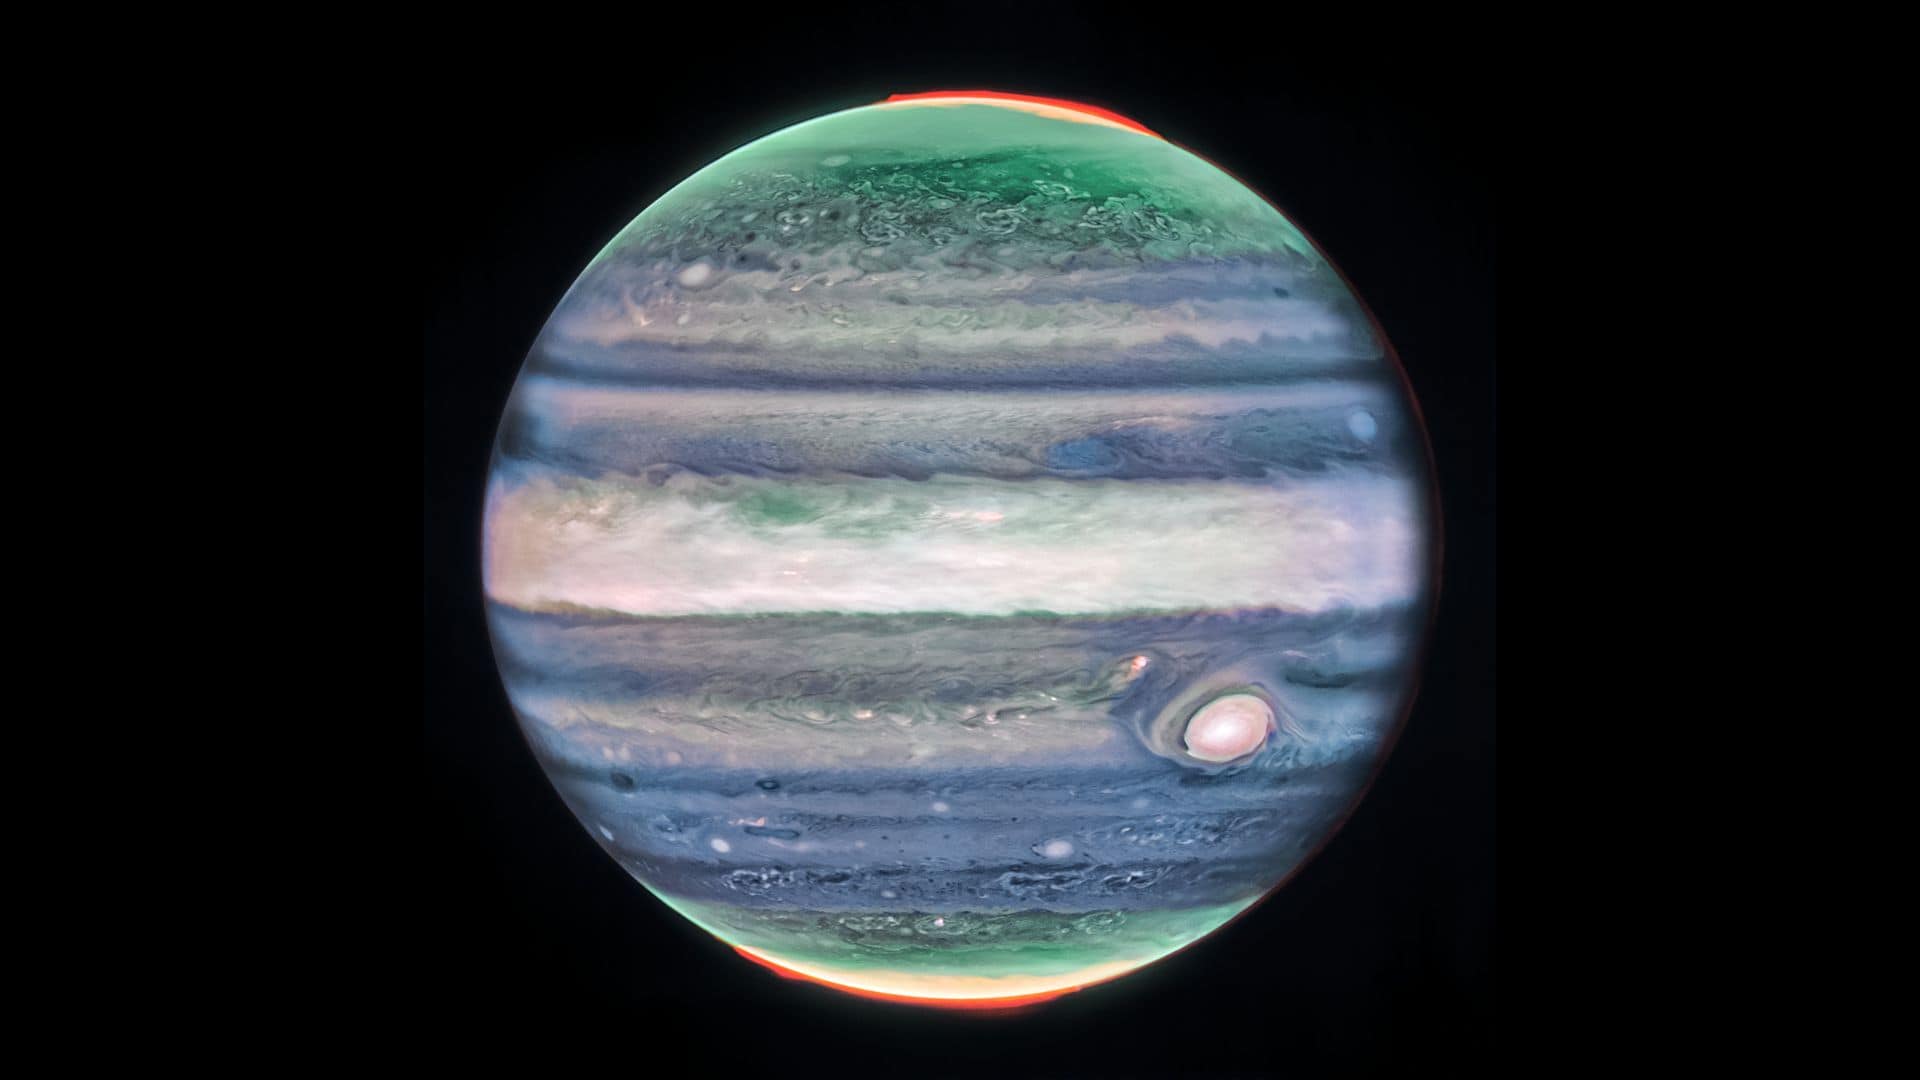 Near-Infrared Camera (NIRCam) of James Webb Space Telescope captures the stunning image of Jupiter